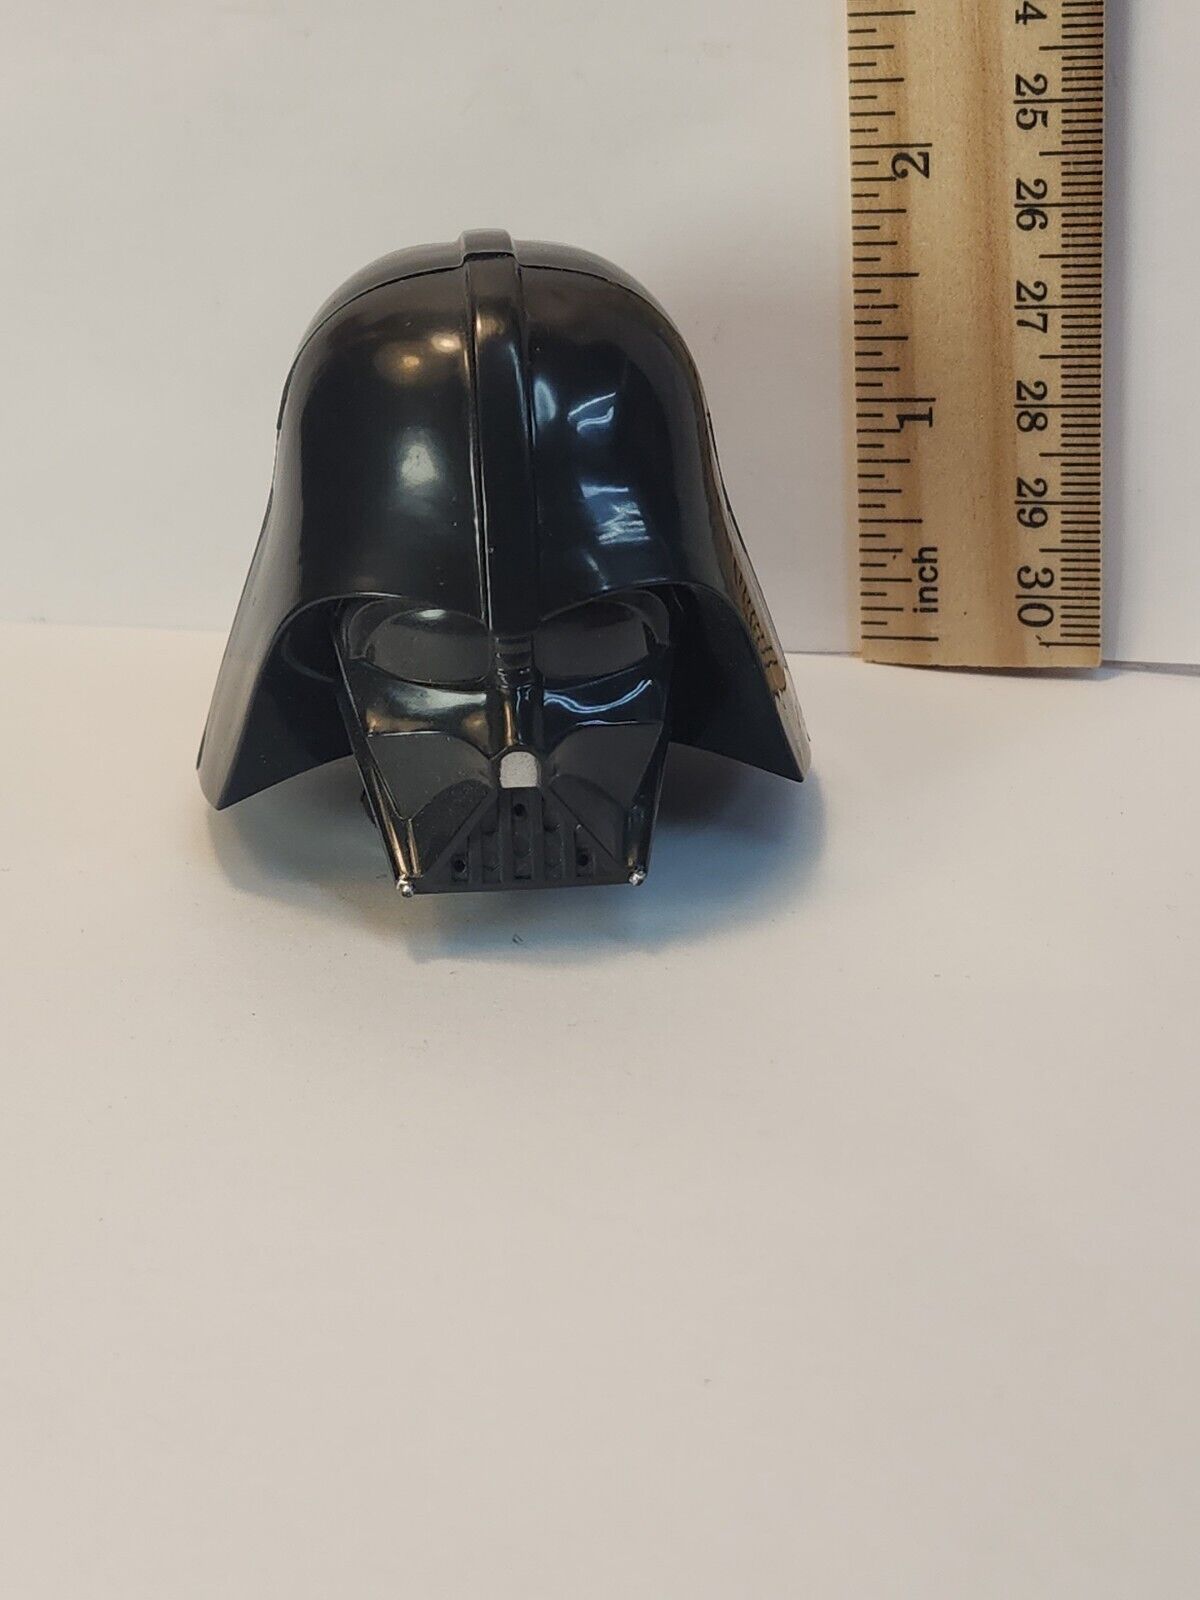 Disney LFL Star Wars Plastic Figural Egg Treat Container - Darth Vadar Sith Lord